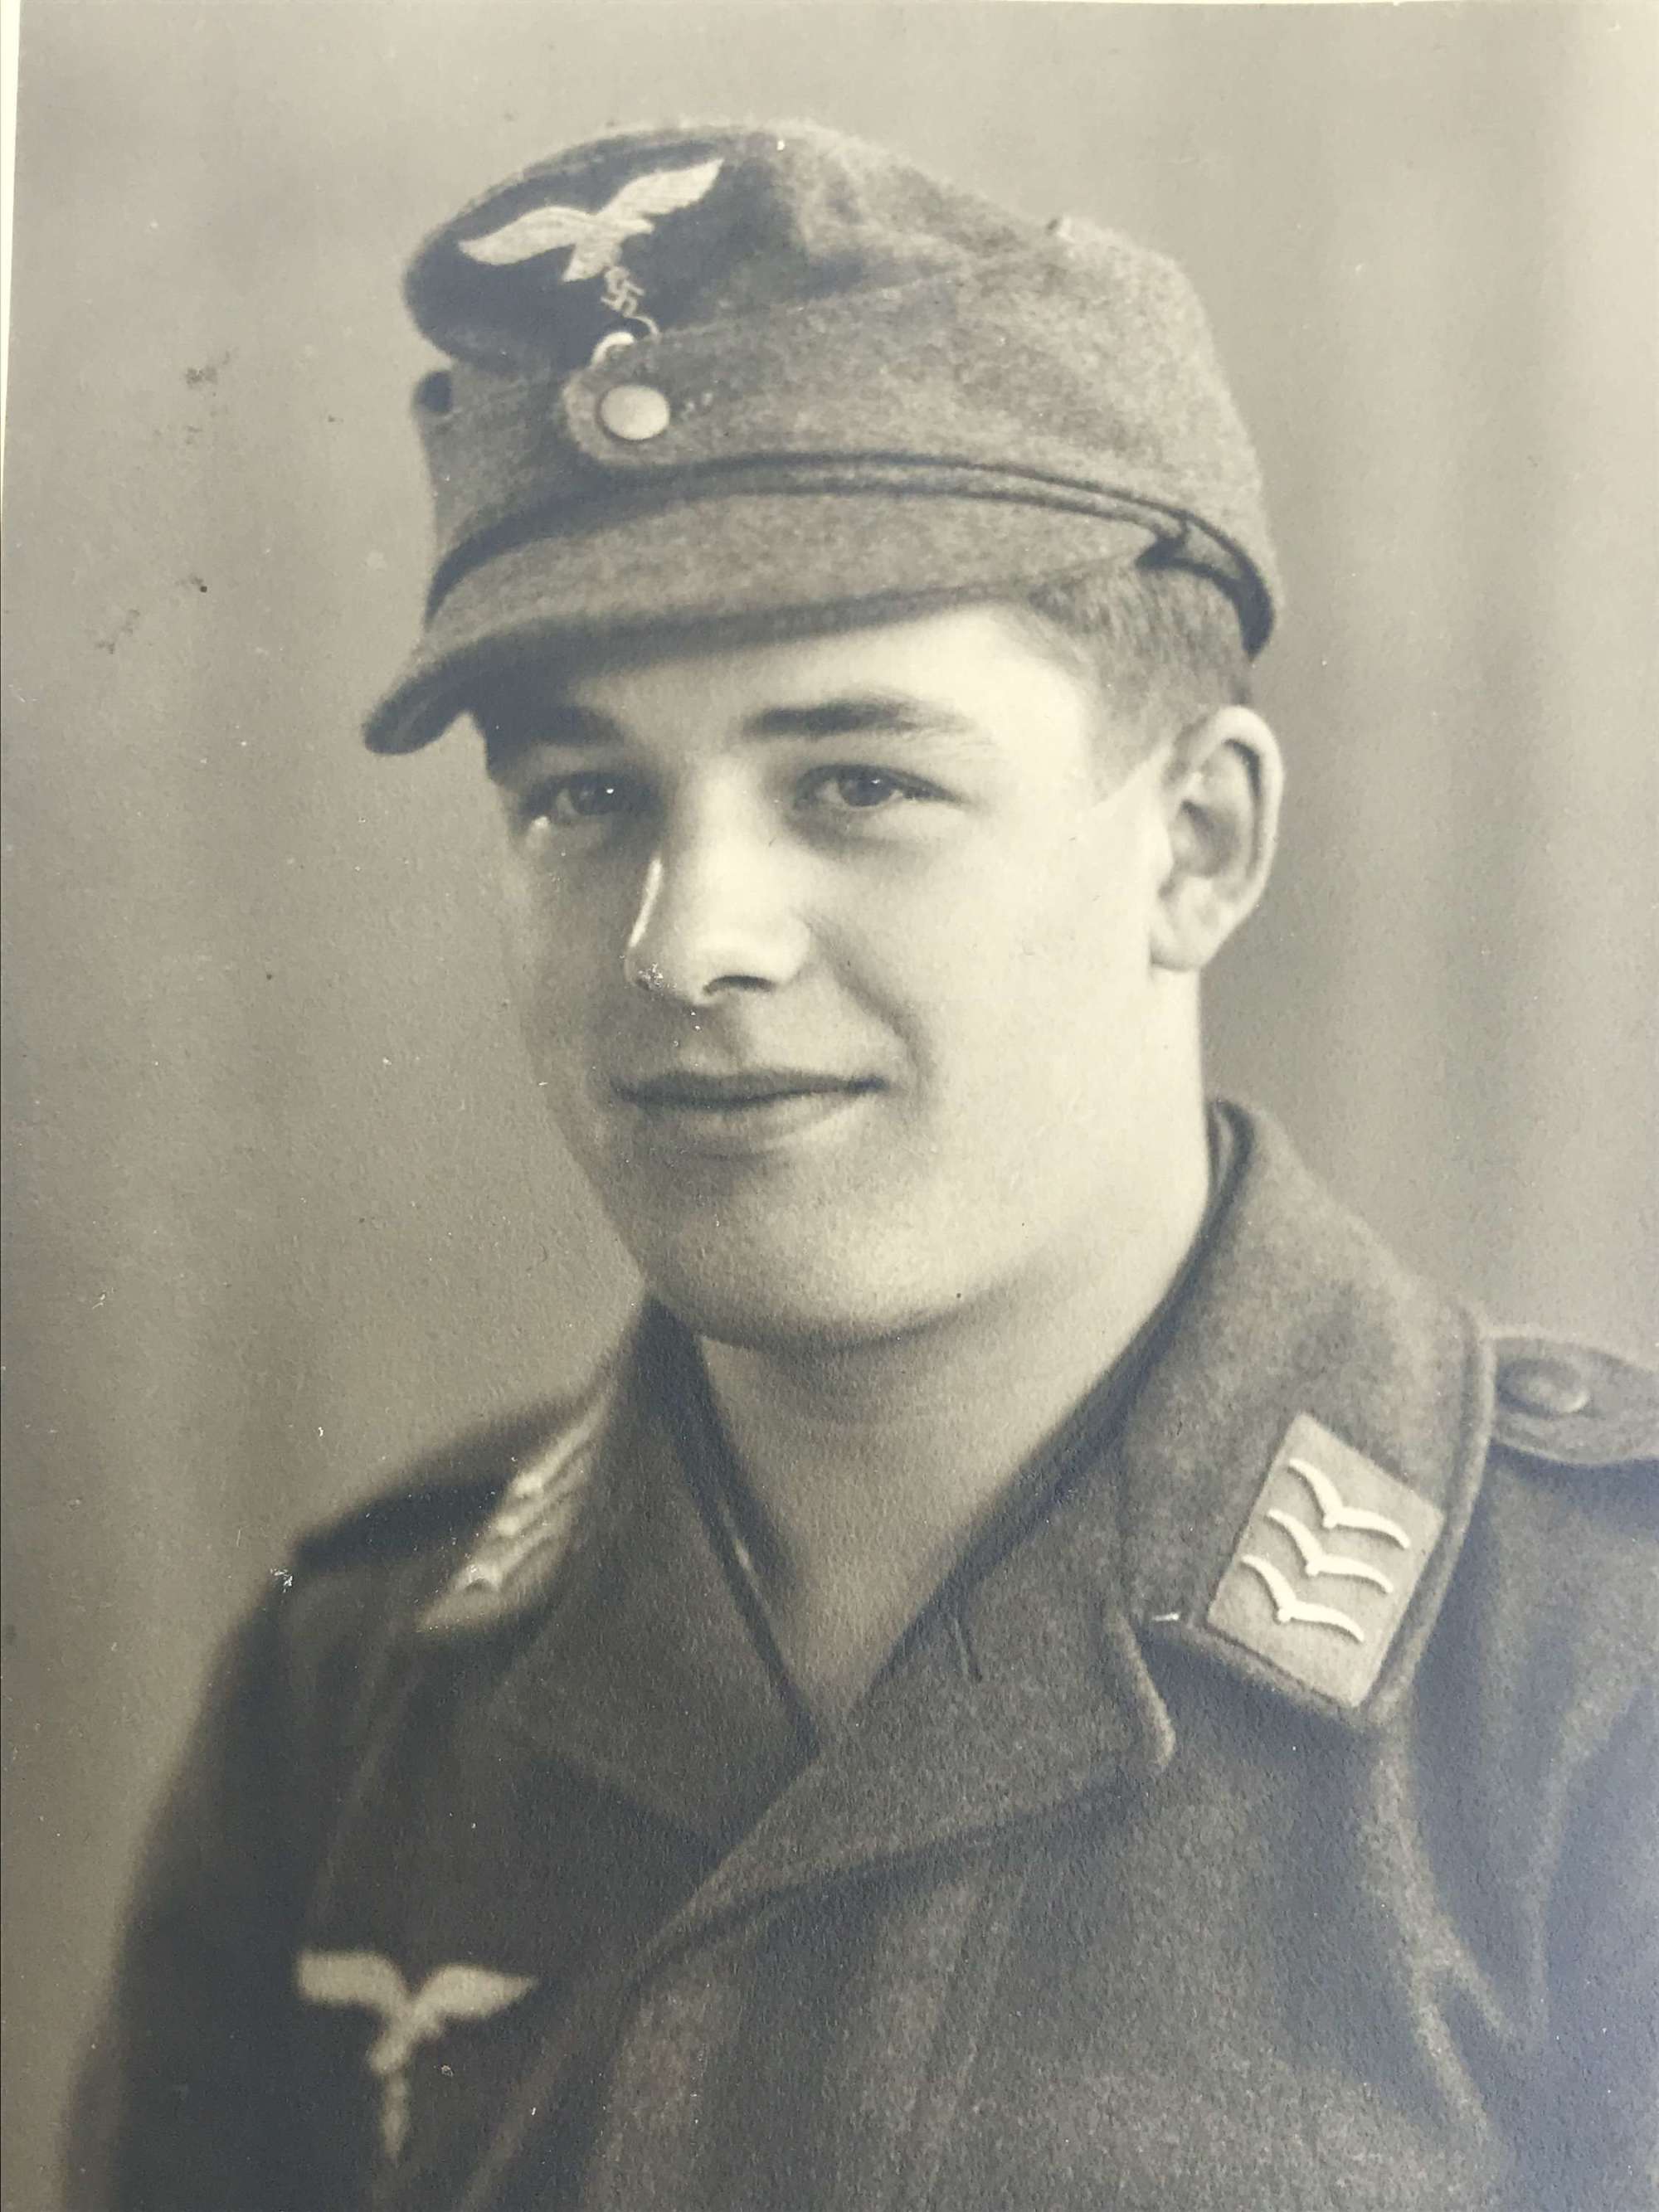 Portrait image of a Fallschirmjager  wearing M43 cap